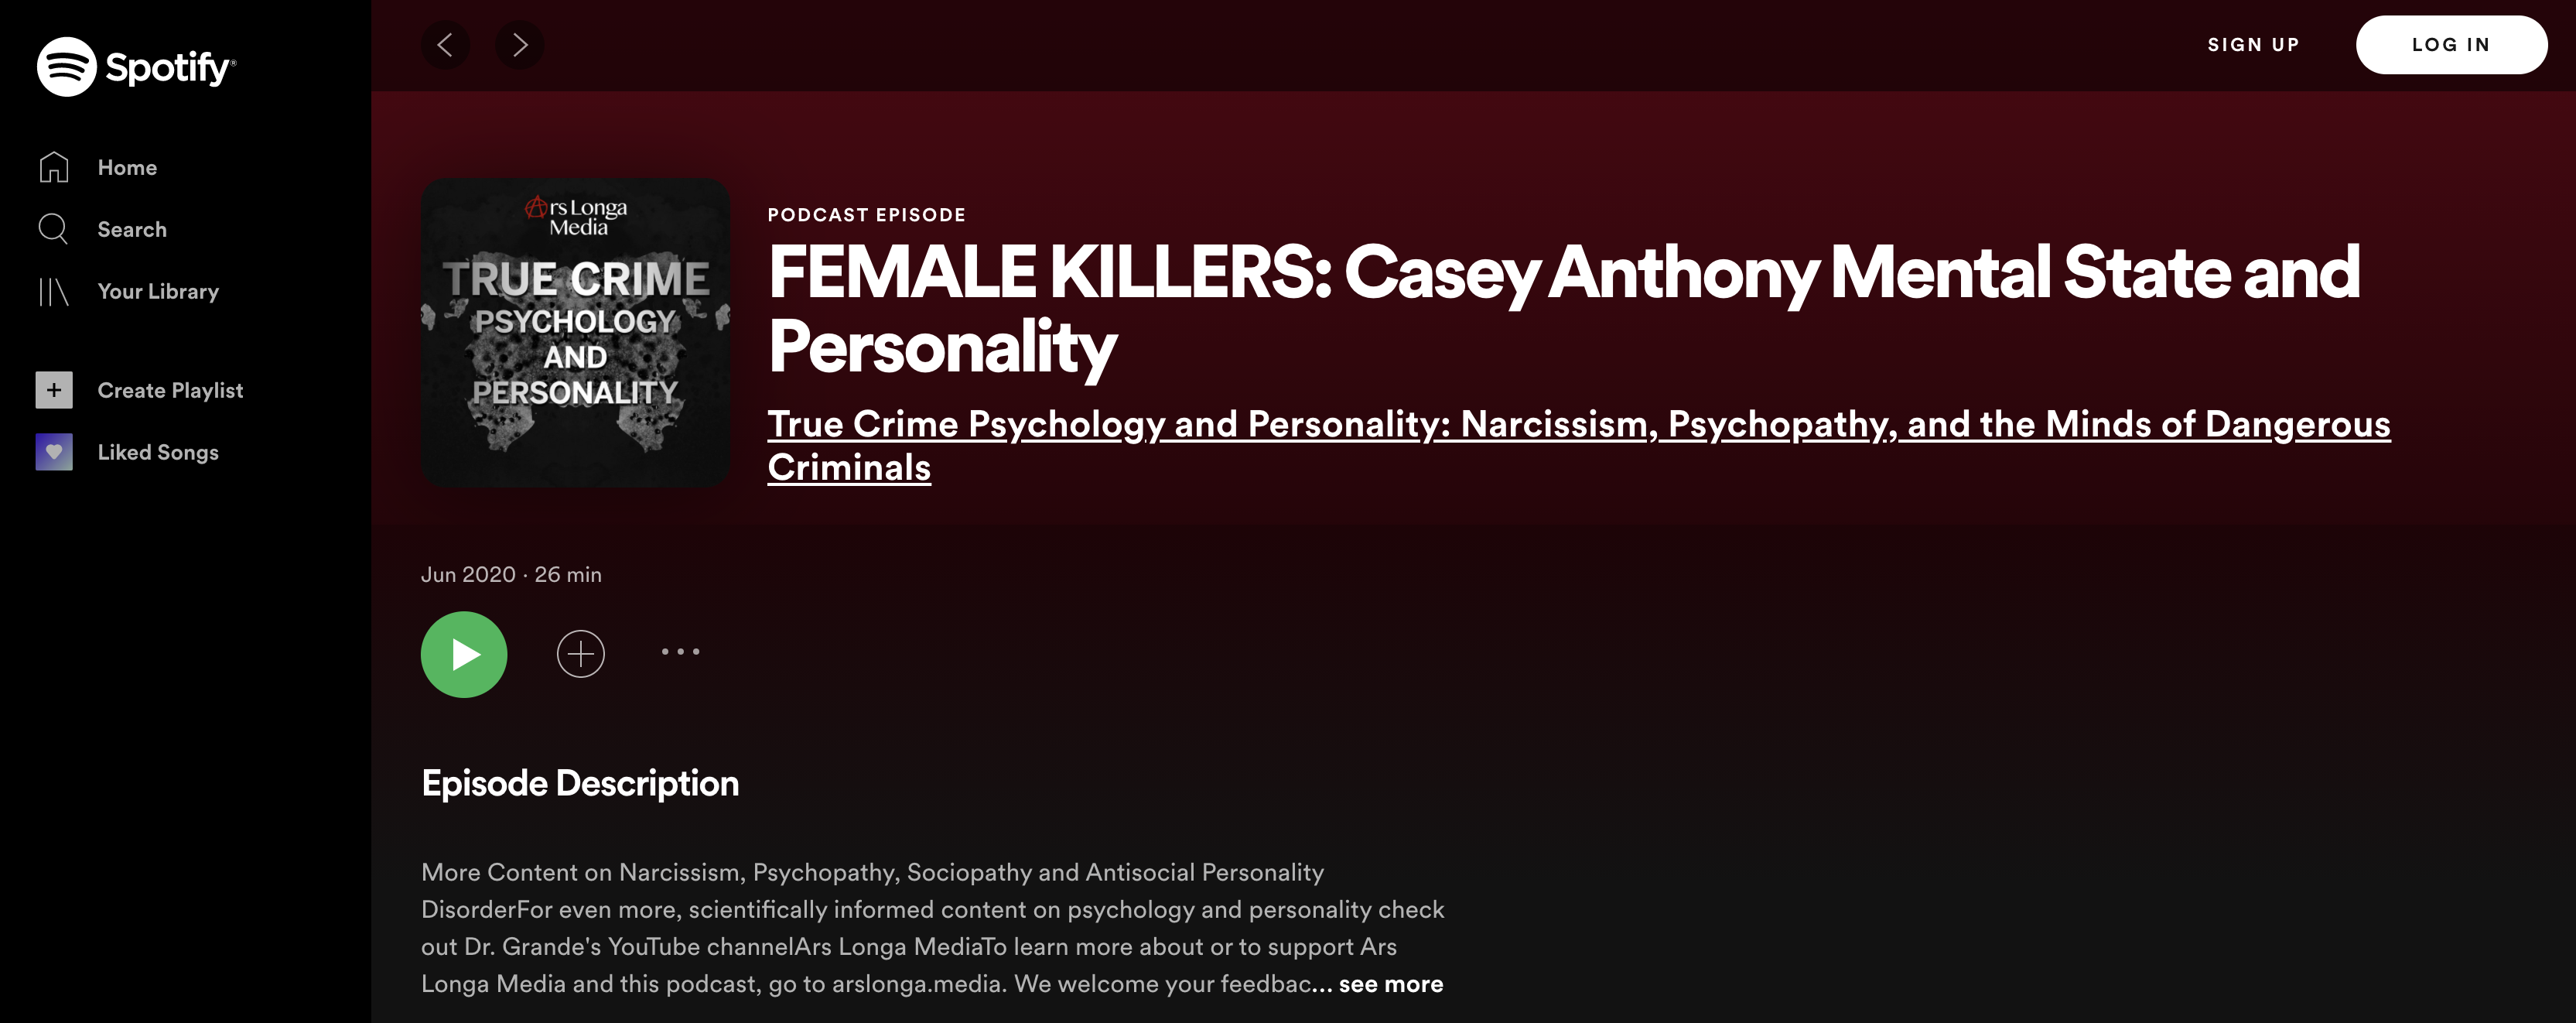 Vega Digital Awards Winner - True Crime Psychology And Personality 